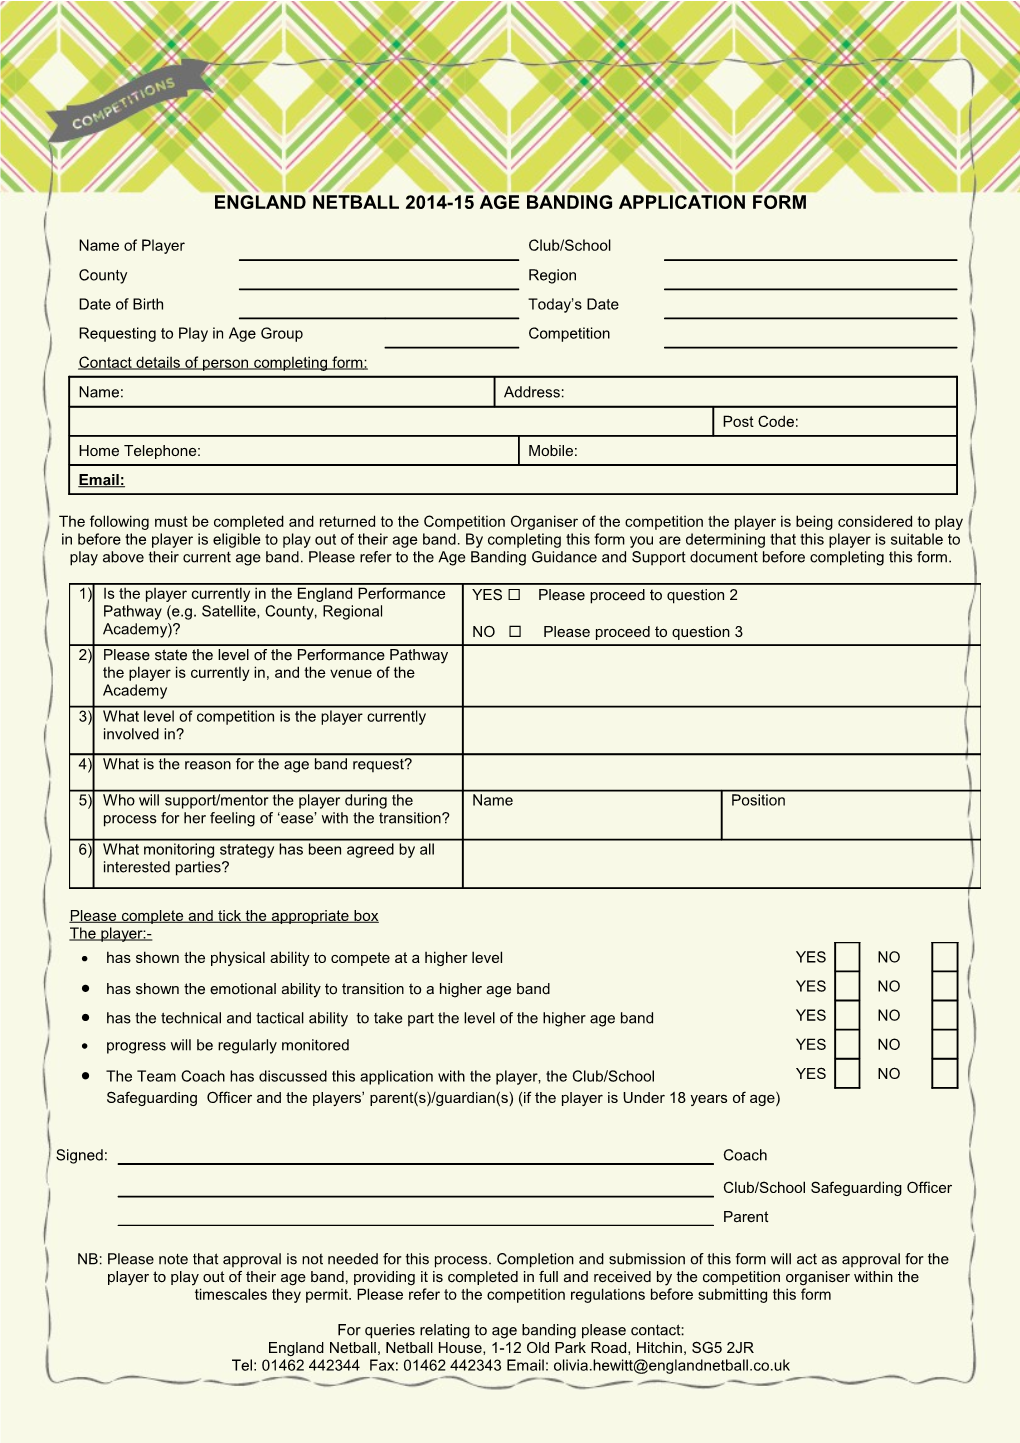 England Netball Age Banding Application Form